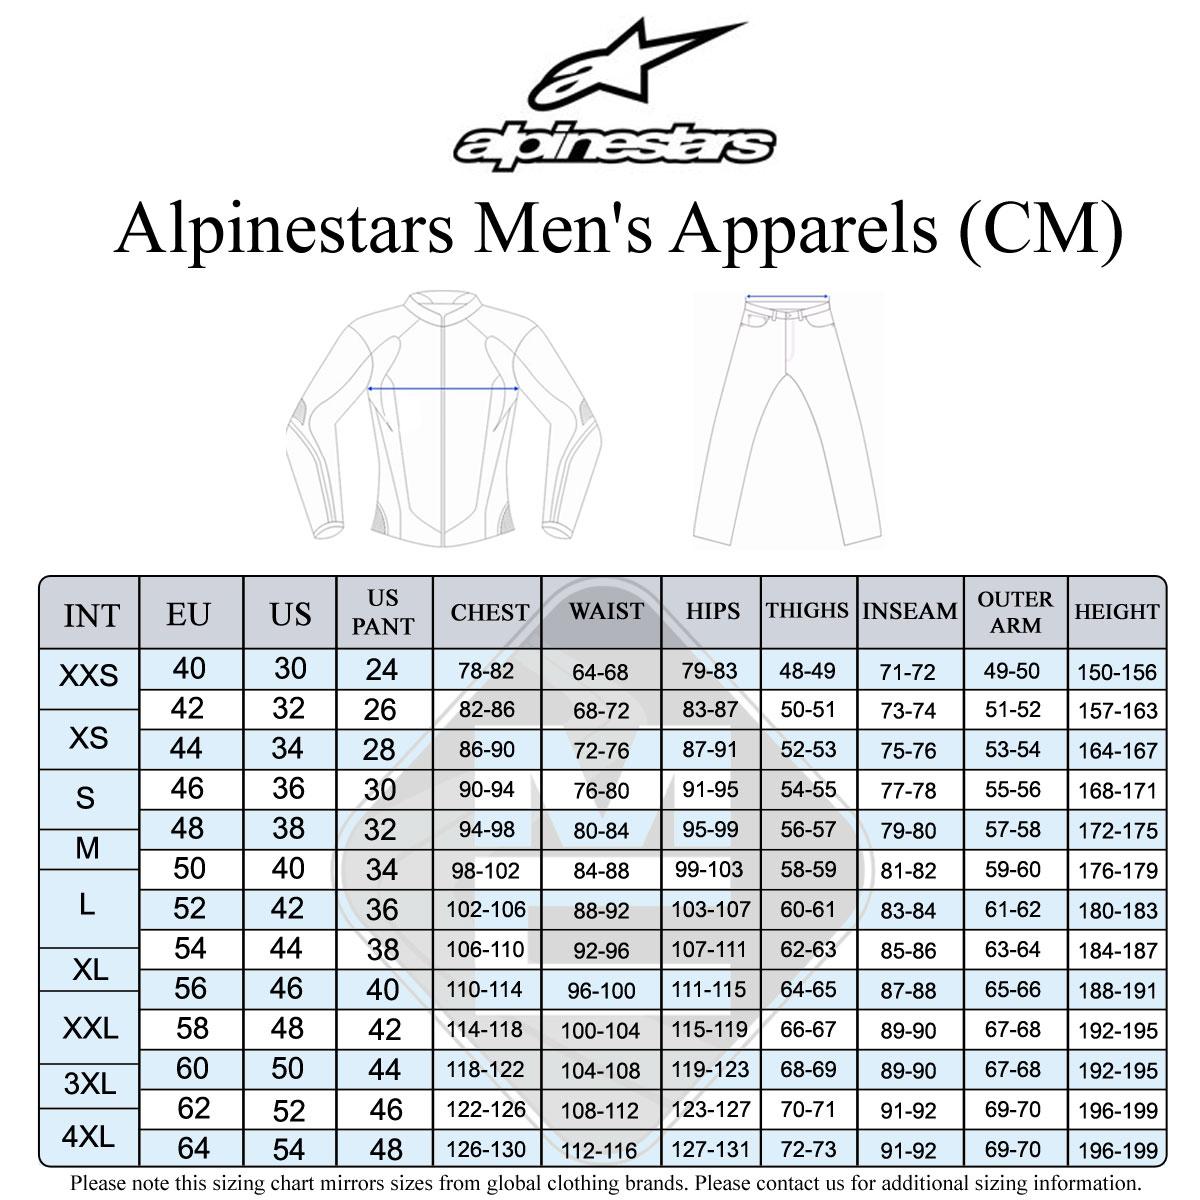 Alpinestars Men's Size Guide